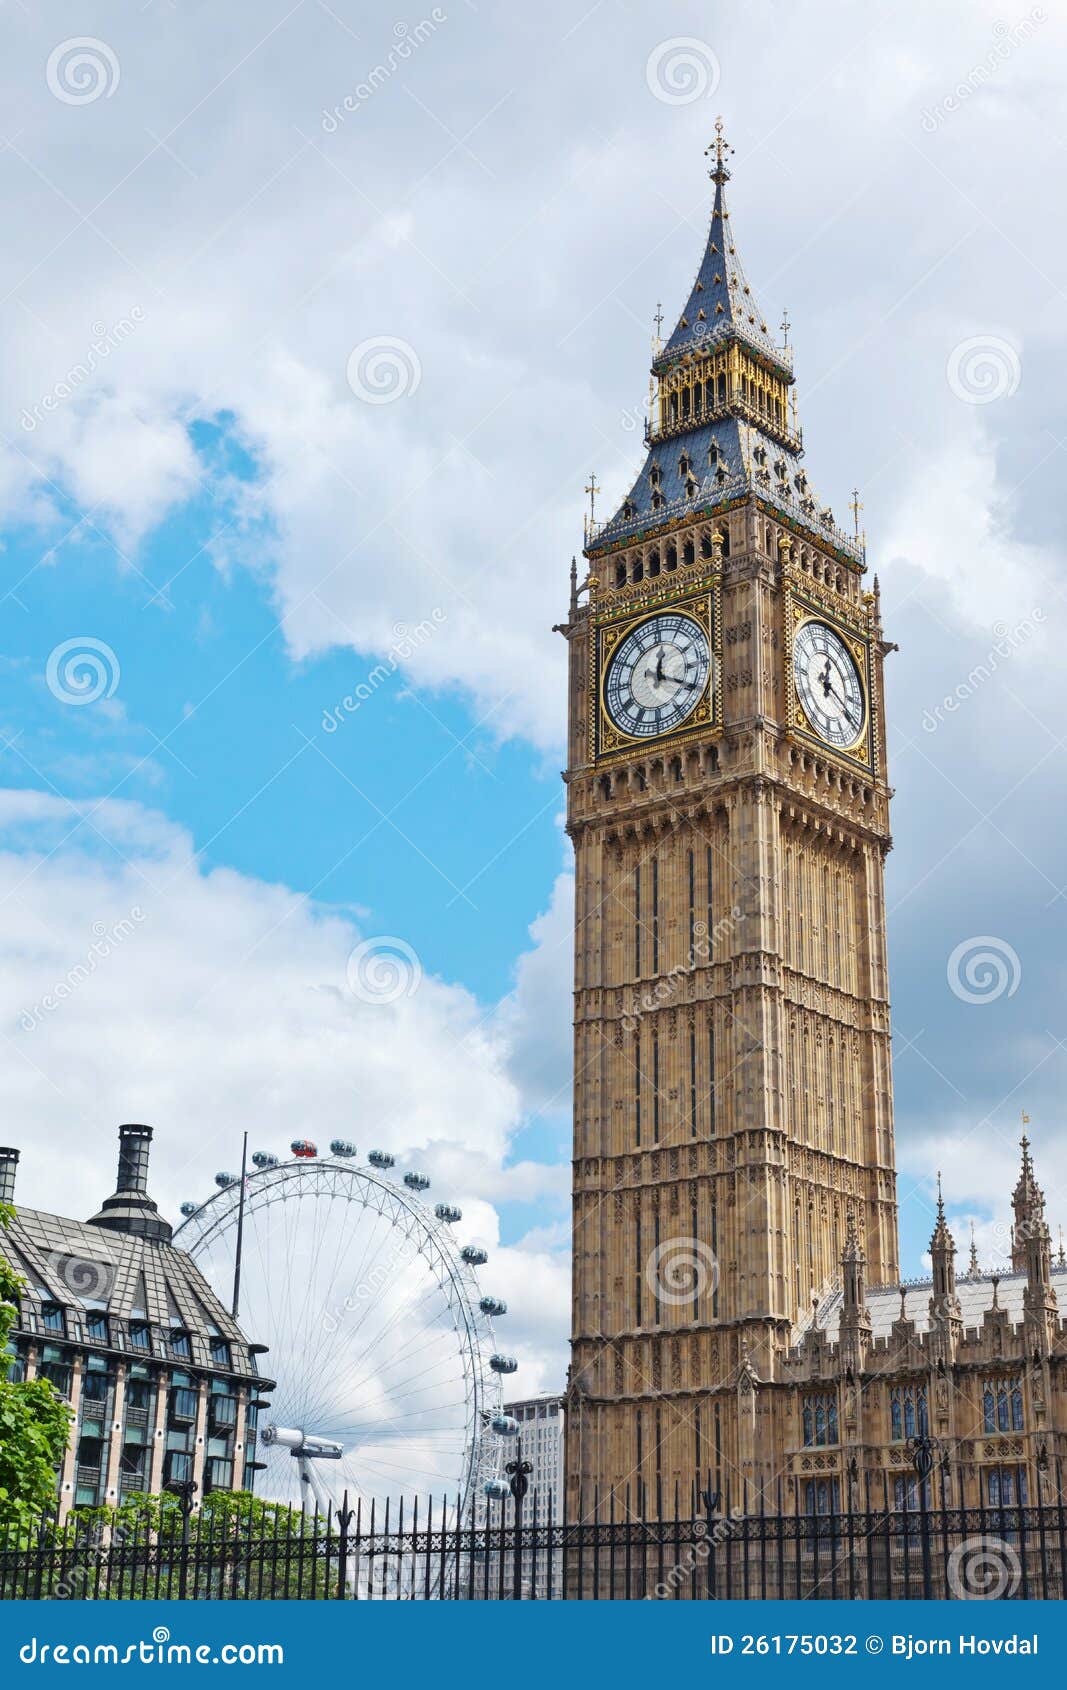 Big Ben And London Eye Editorial Photography Image Of Kingdom